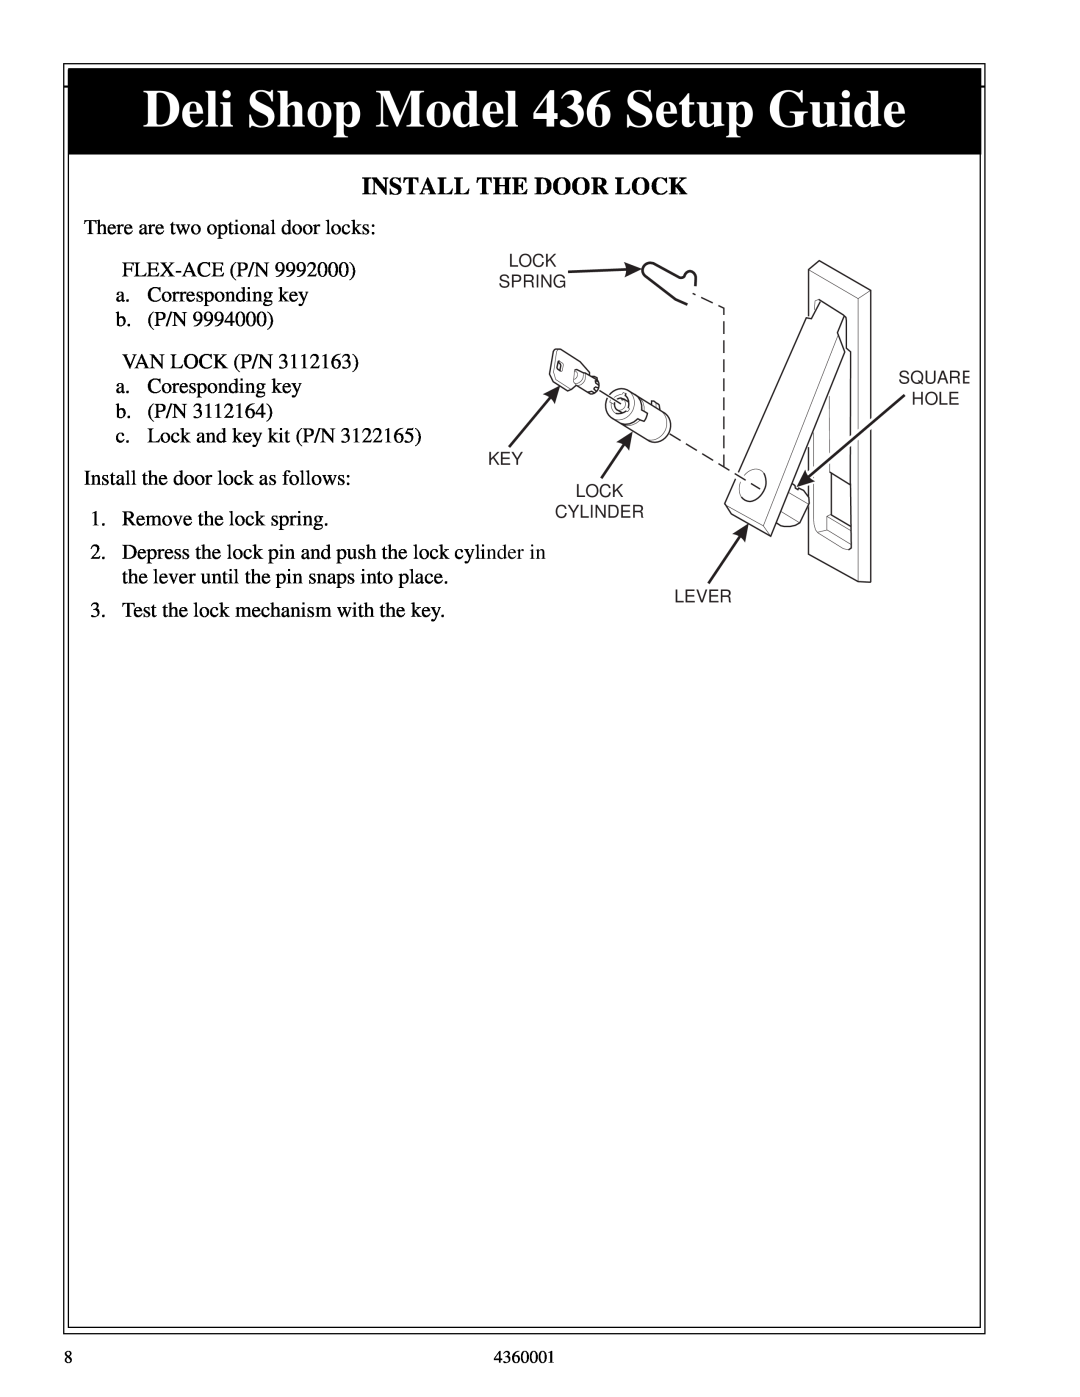 Crane Merchandising Systems manual Install The Door Lock, Deli Shop Model 436 Setup Guide 